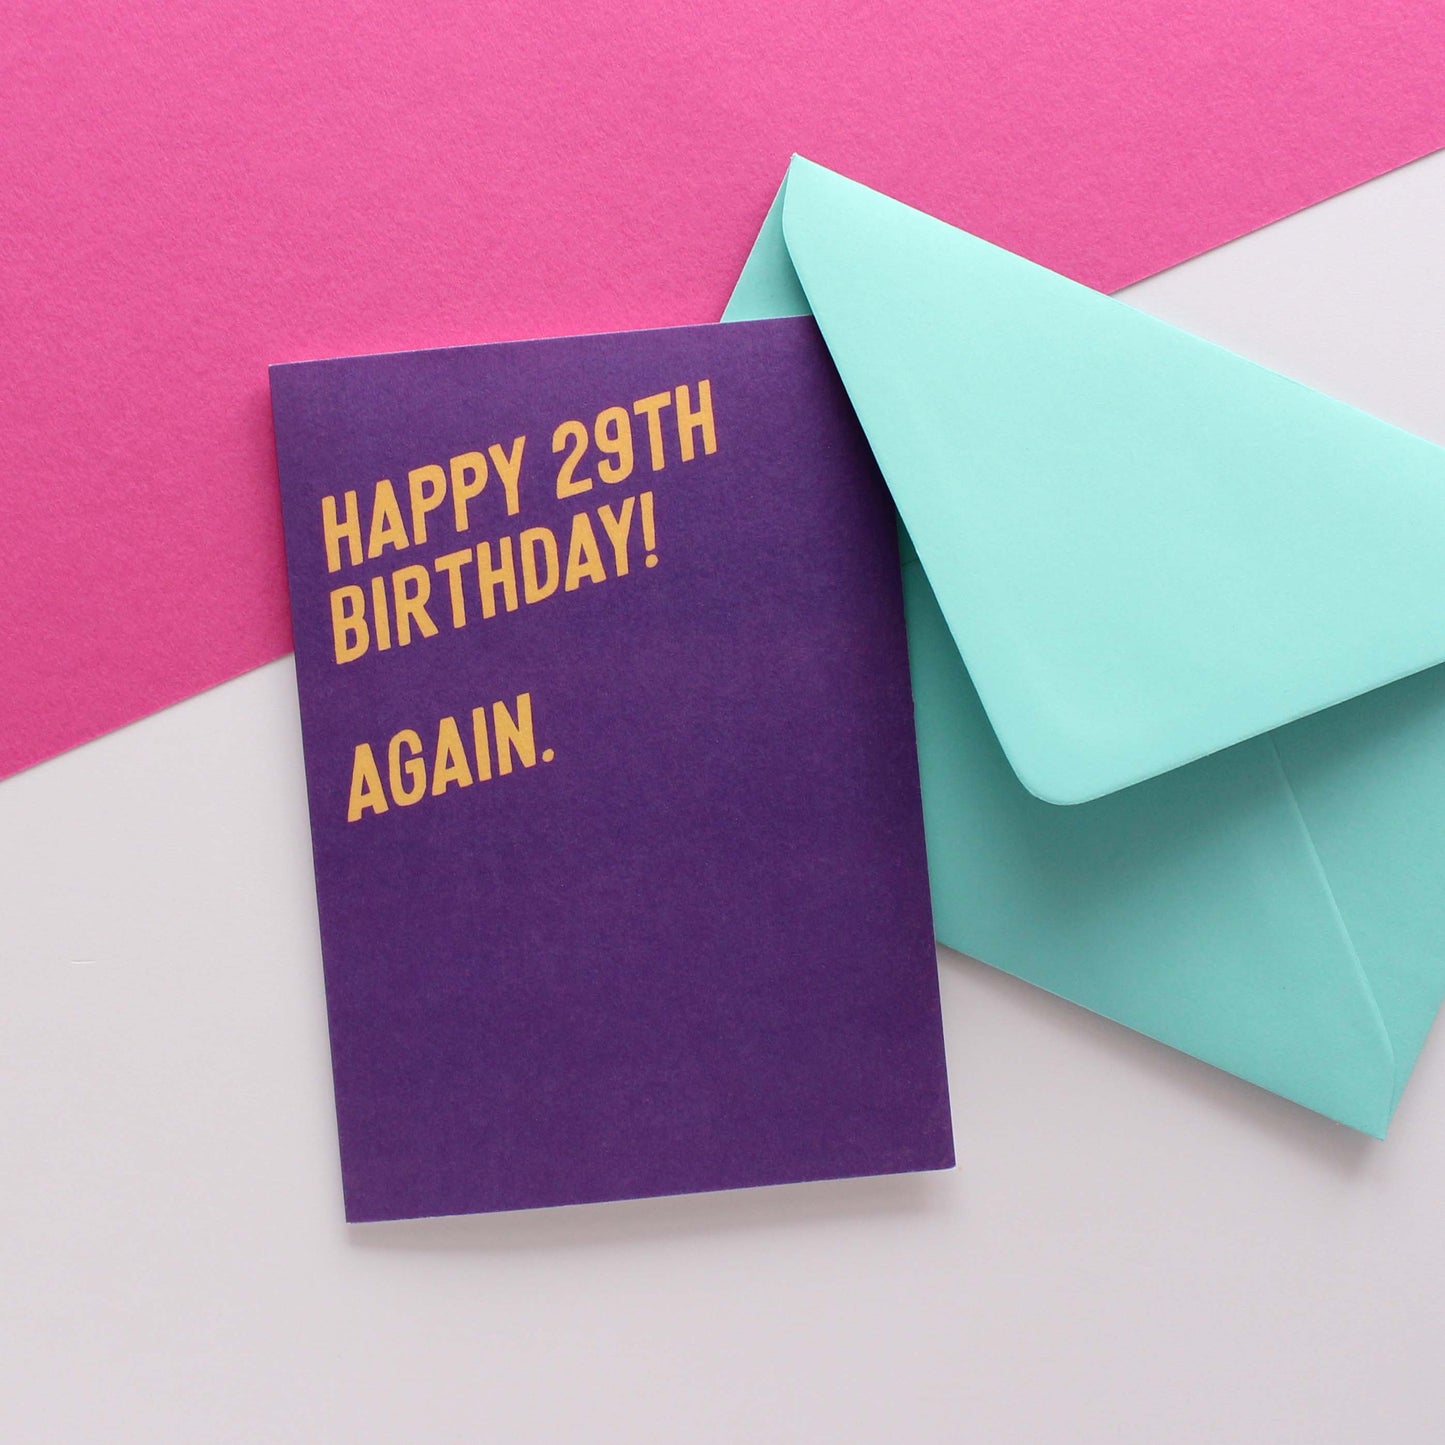 Happy 29th birthday again card from Purple Tree Designs